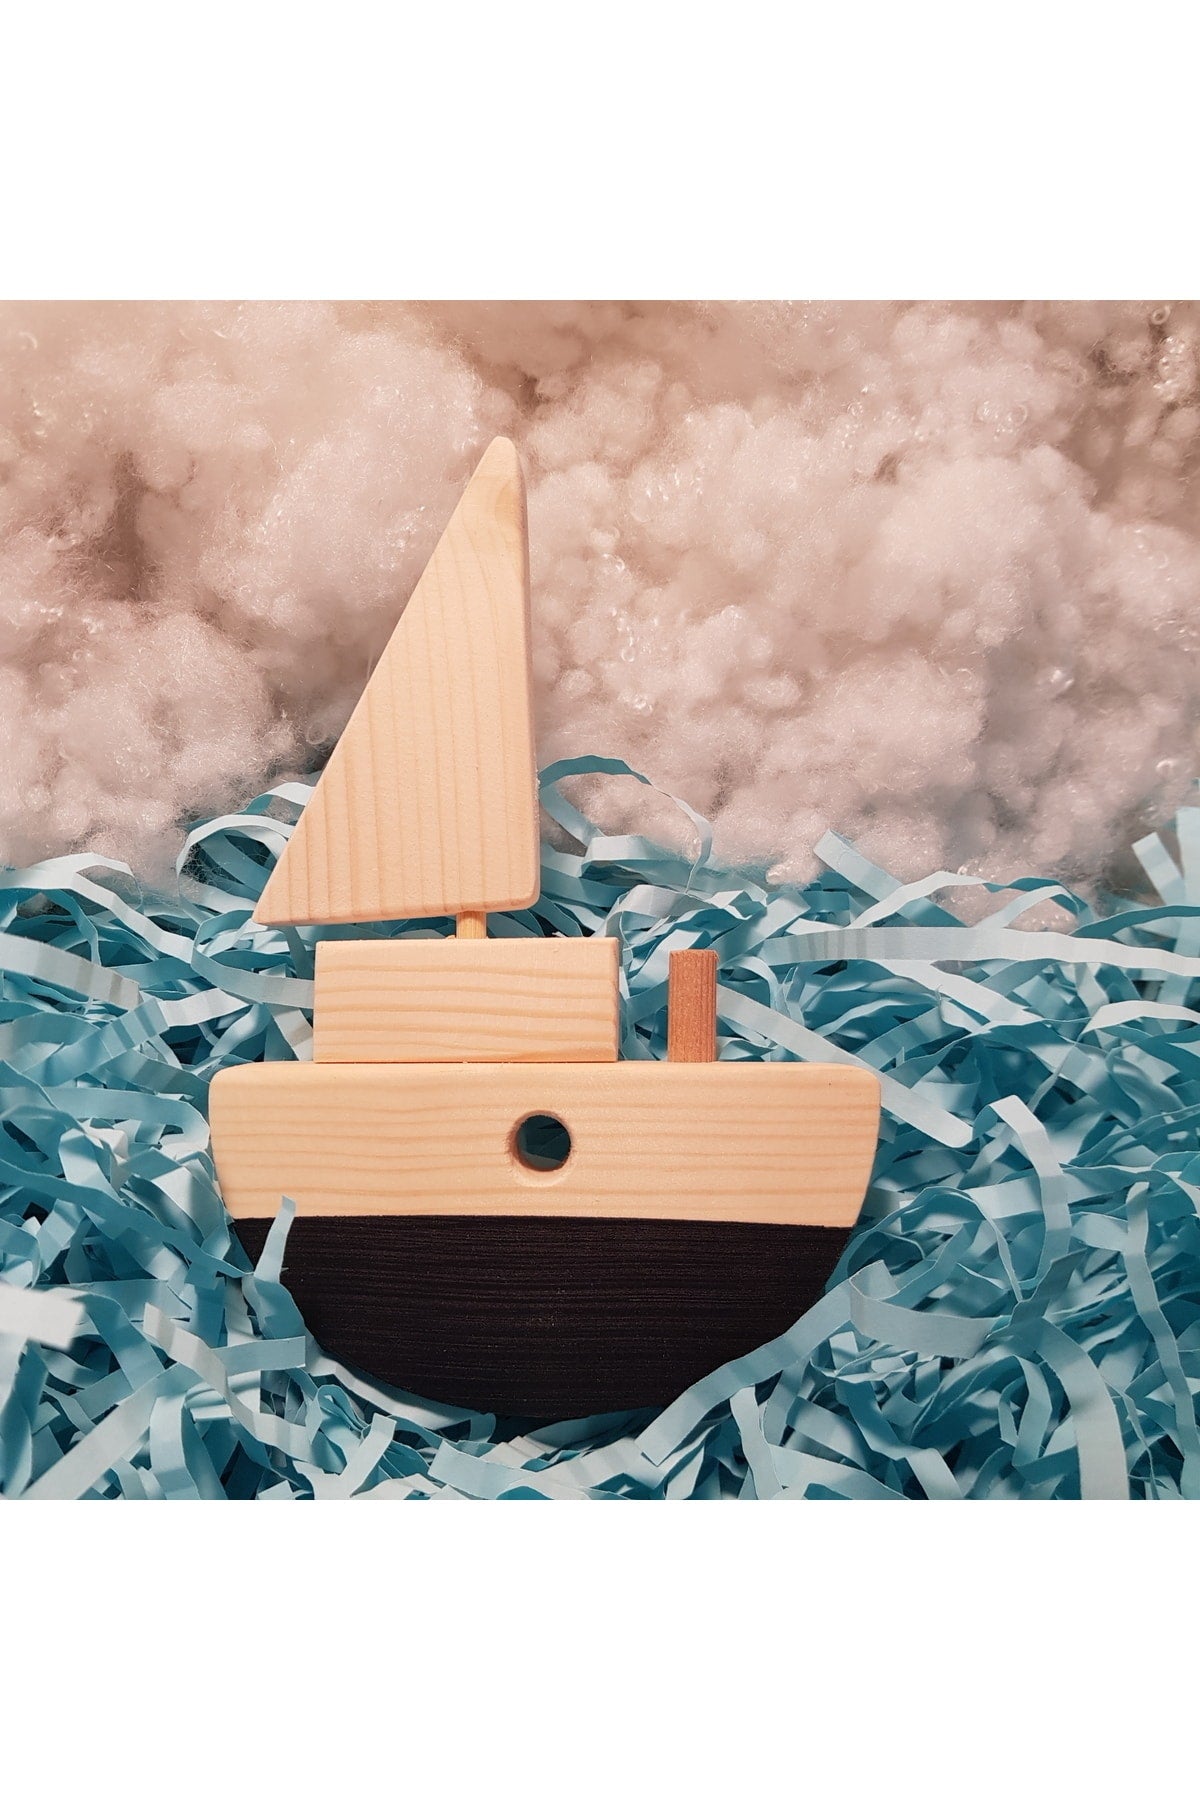 Handmade Wooden Toy Baby Ship Children's Imagination Gift Toy